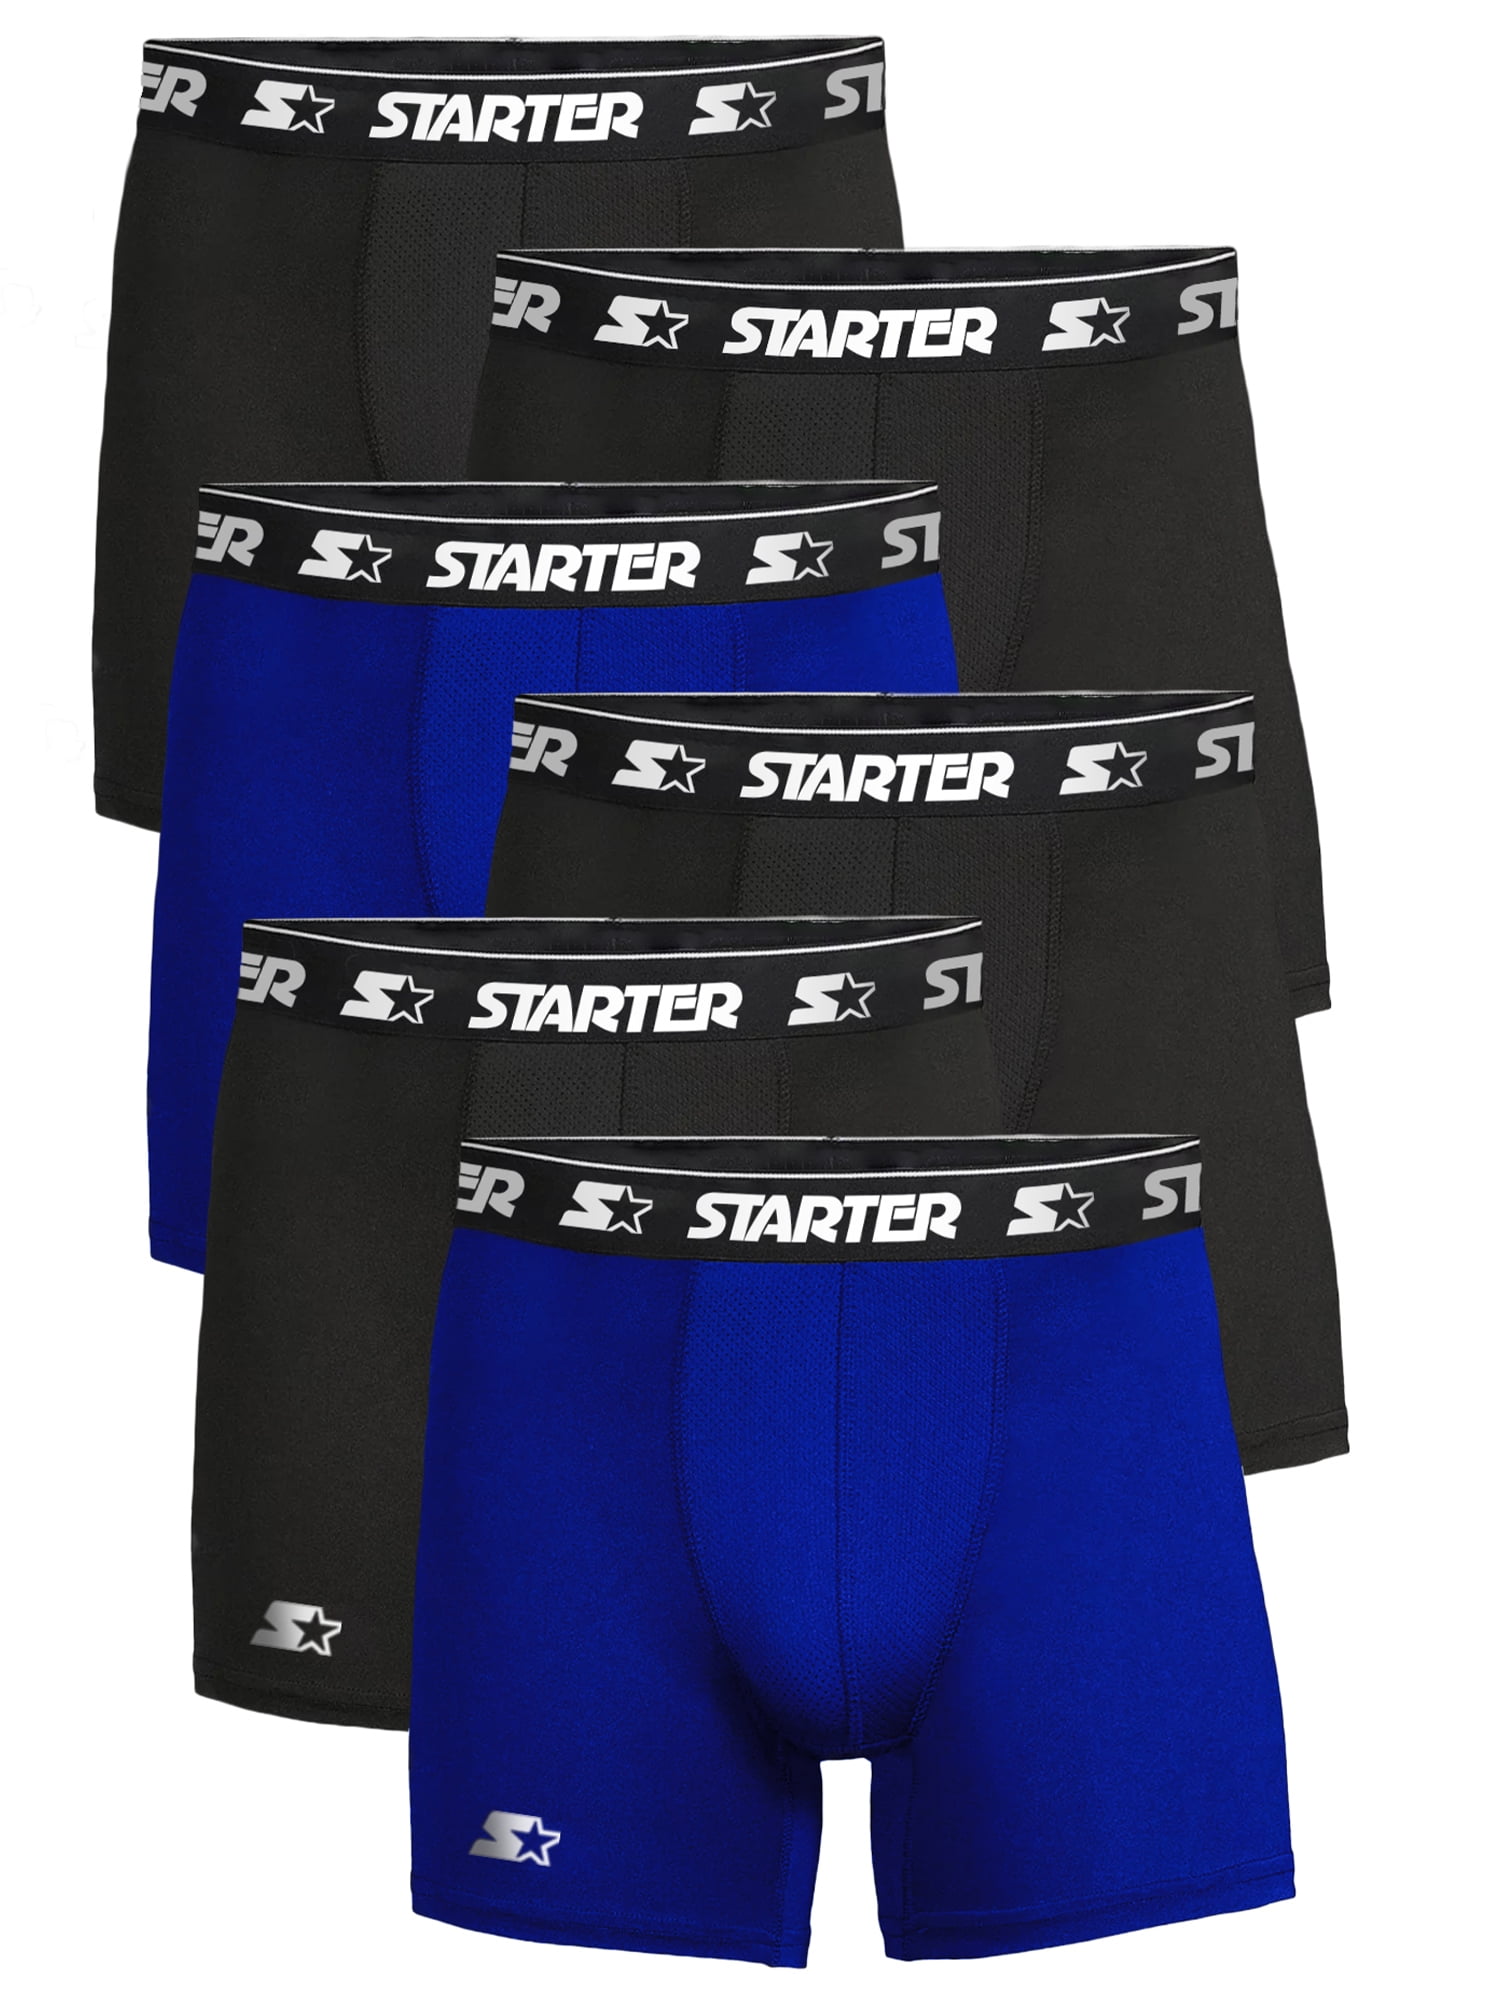 Buy Starter men 3 pk performance boxer briefs navy and light grey